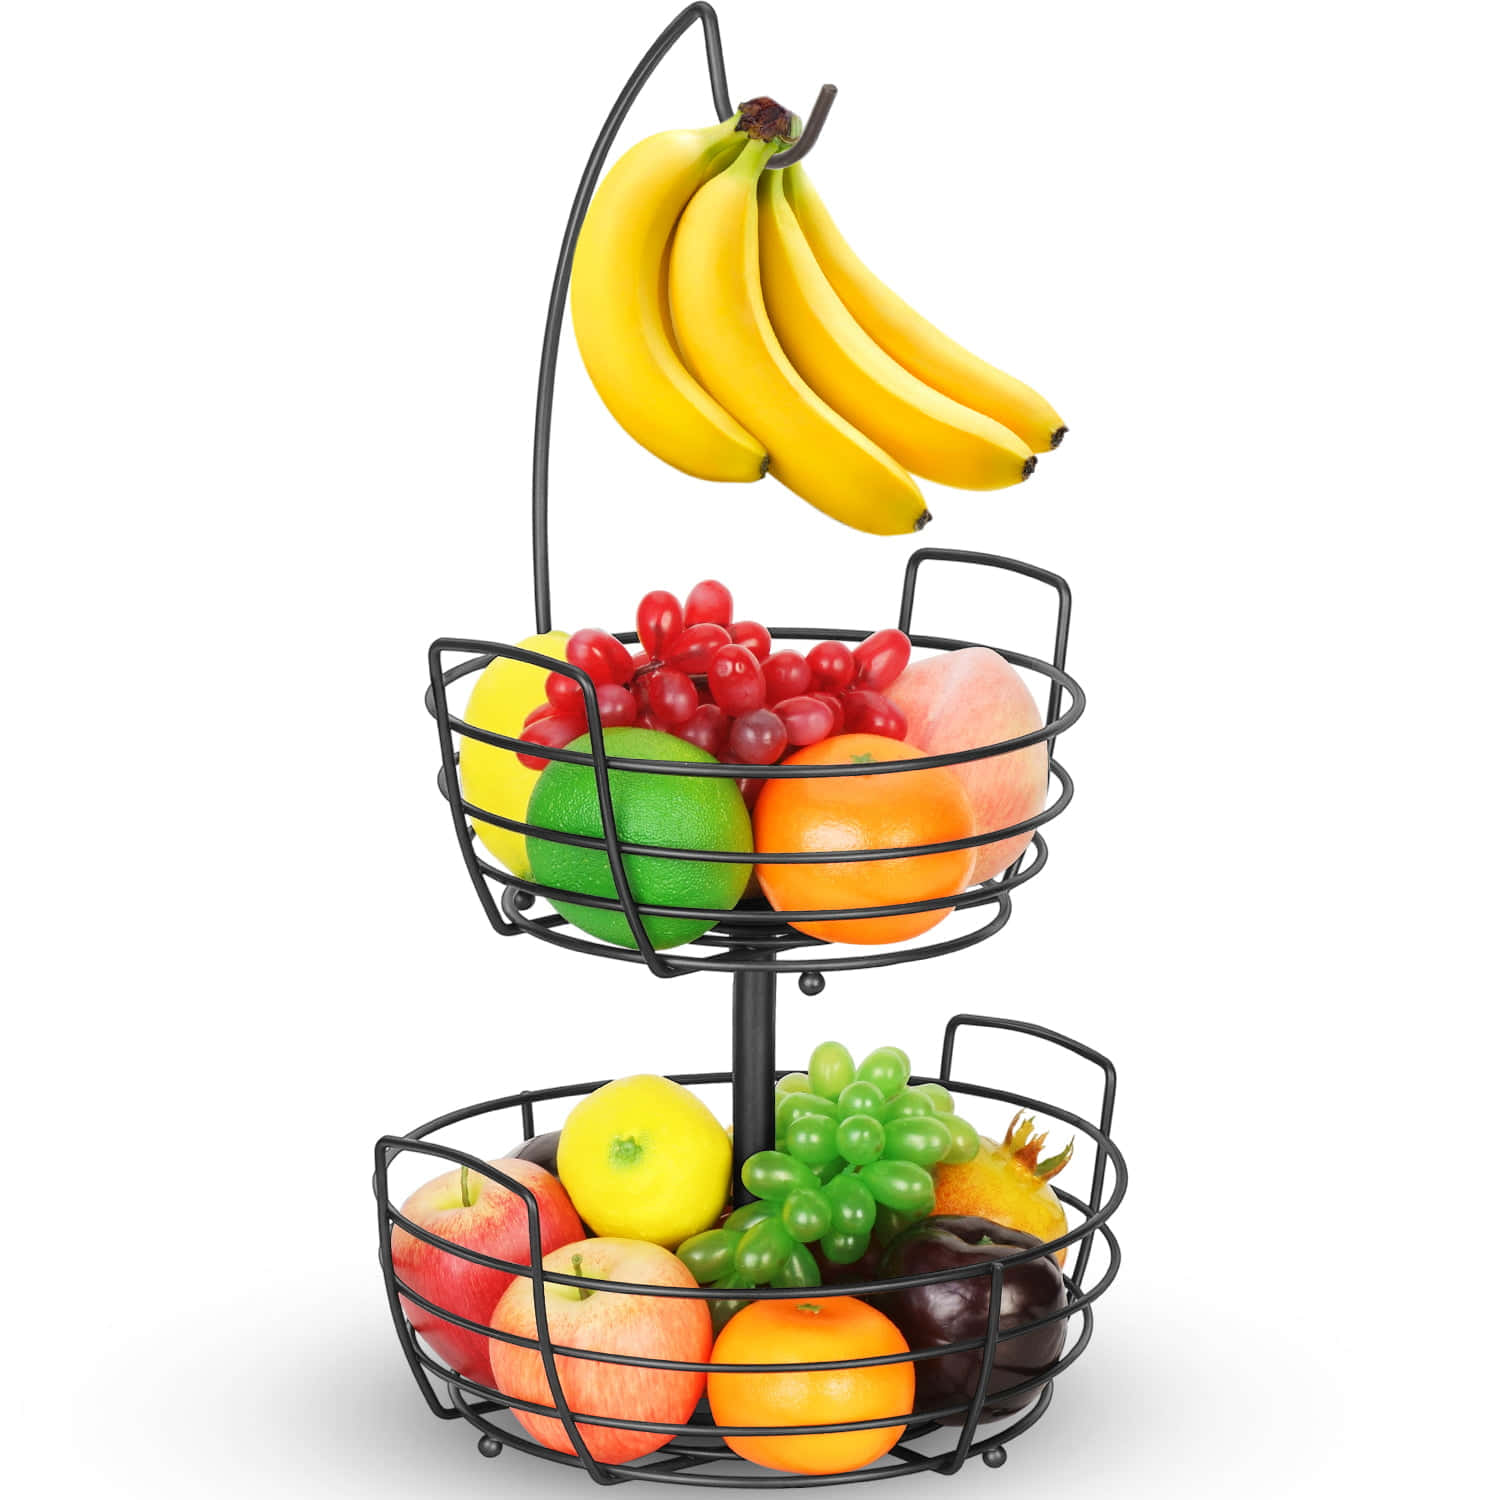 Fruits Basket - A Fun Anime Series